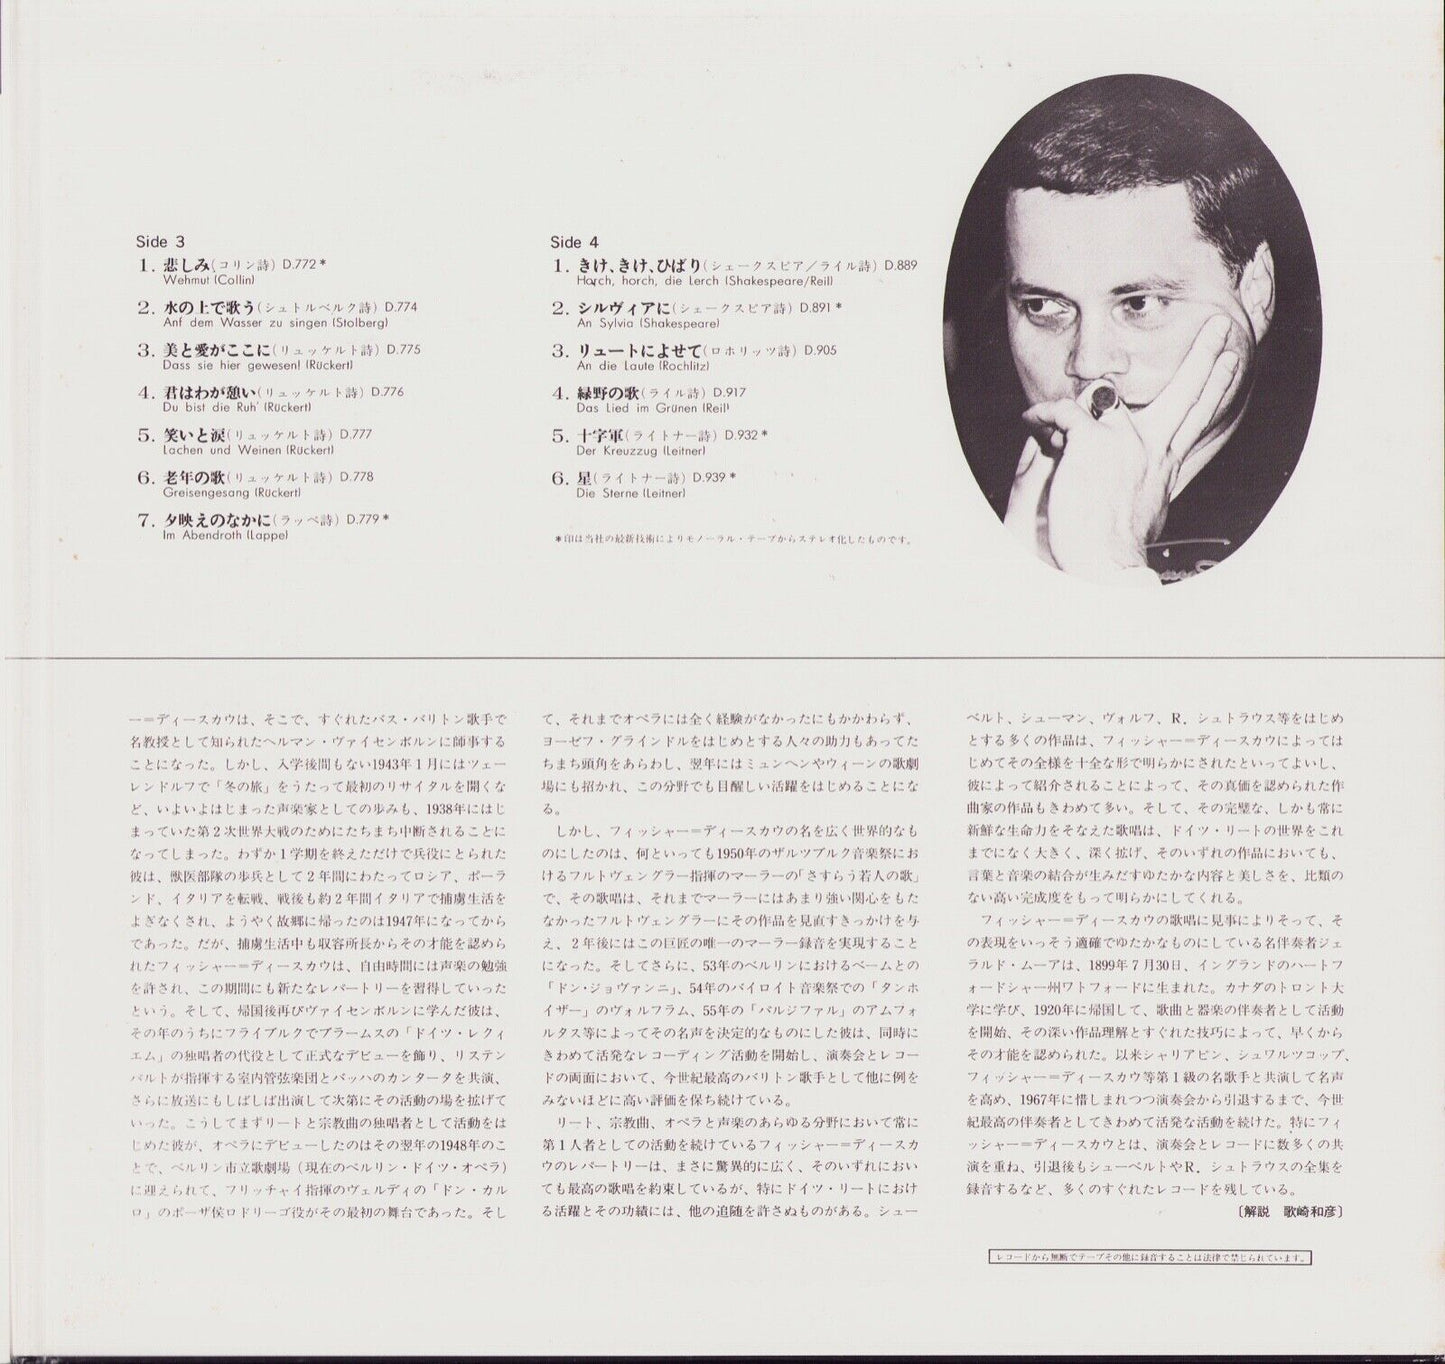 Dietrich Fischer-Dieskau sings Schubert Songs VInyl 2LP JAPAN